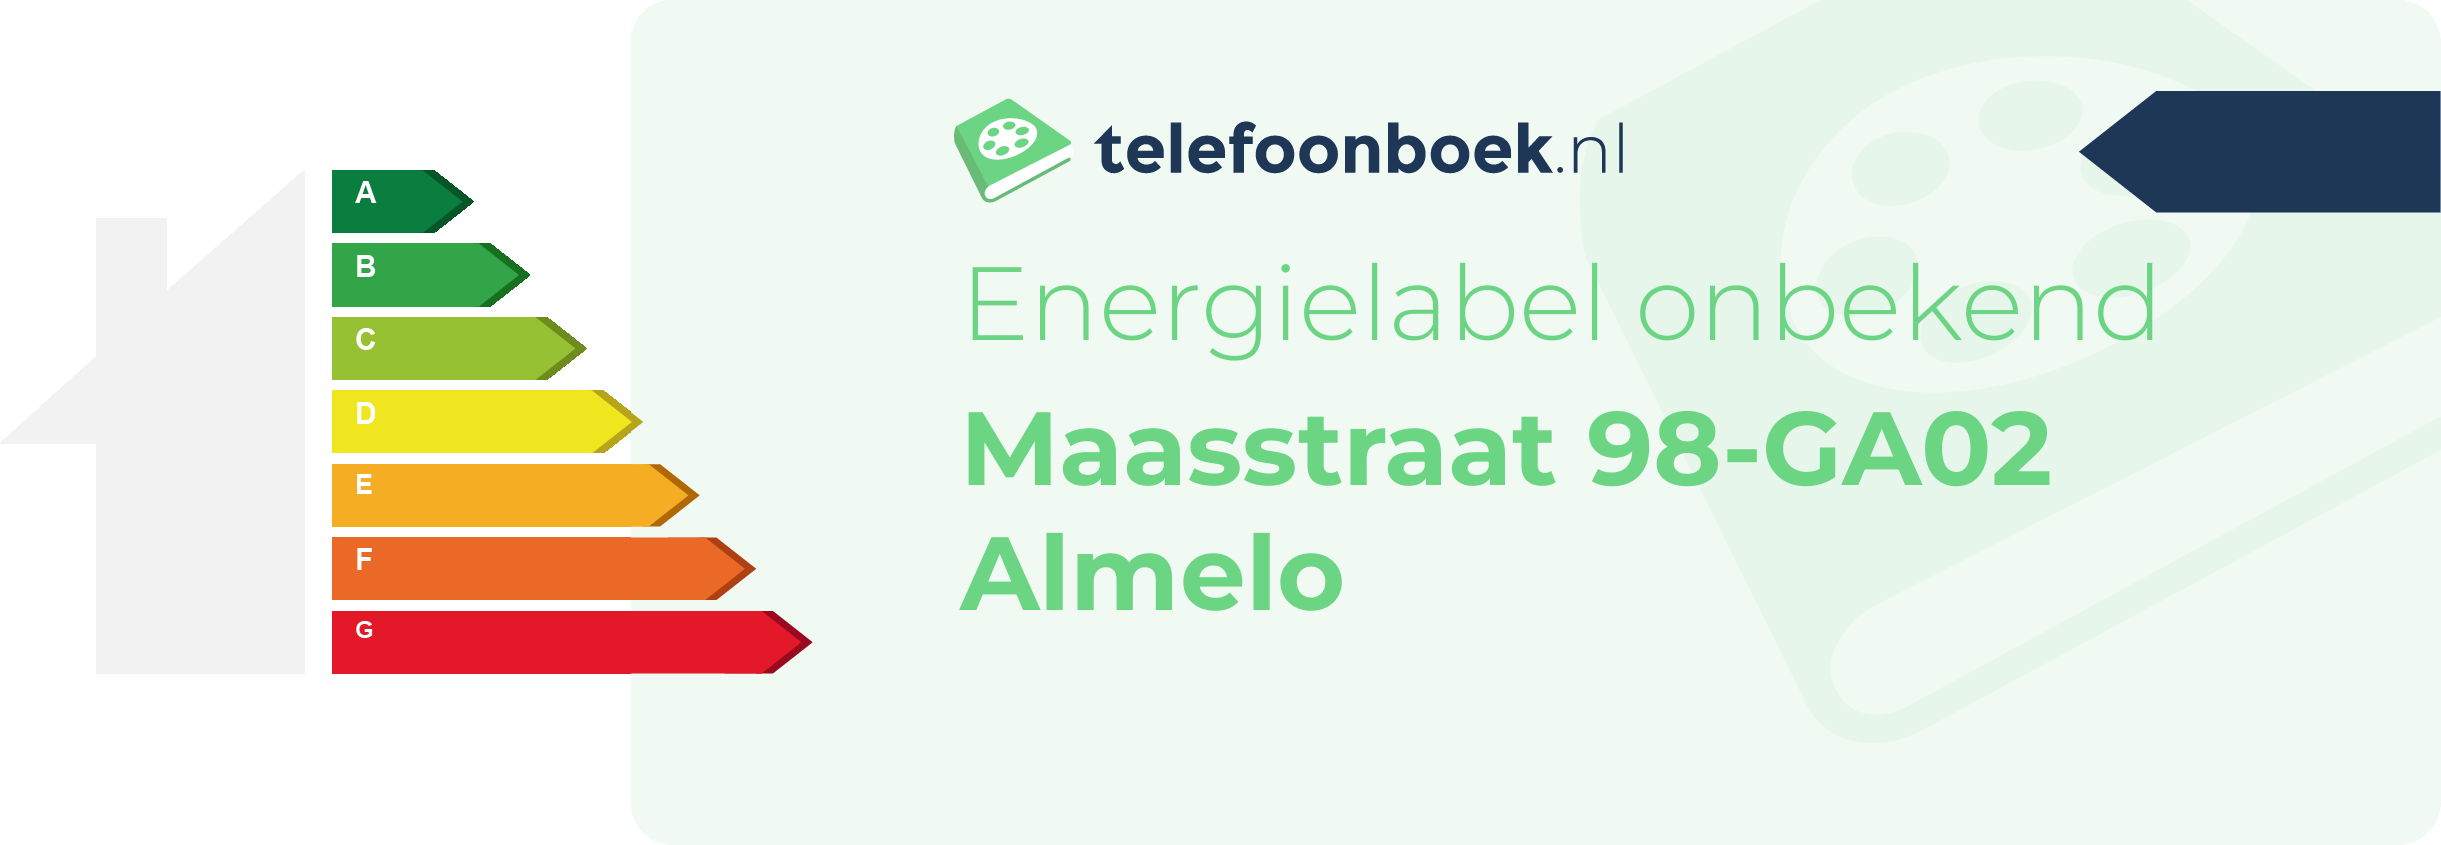 Energielabel Maasstraat 98-GA02 Almelo